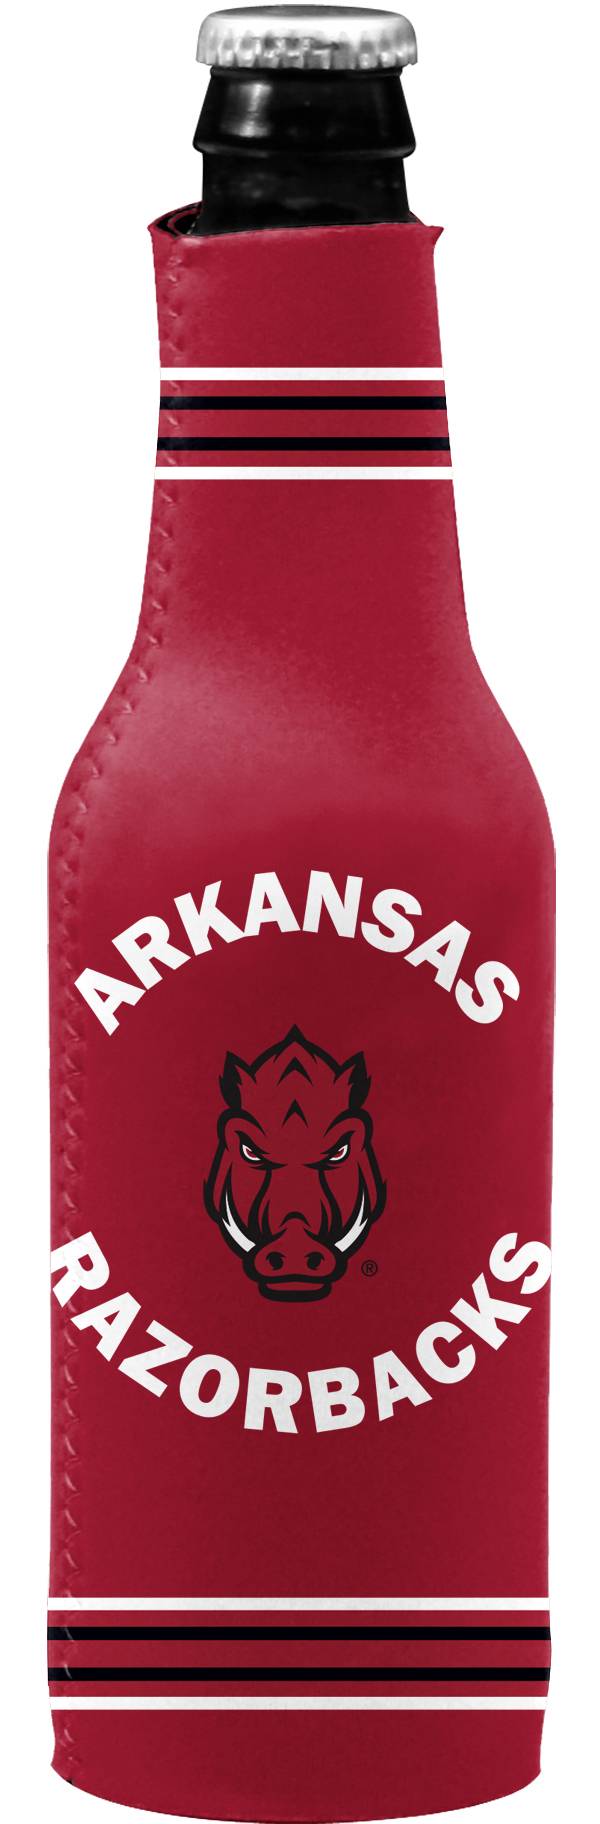 Arkansas Razorbacks Bottle Koozie